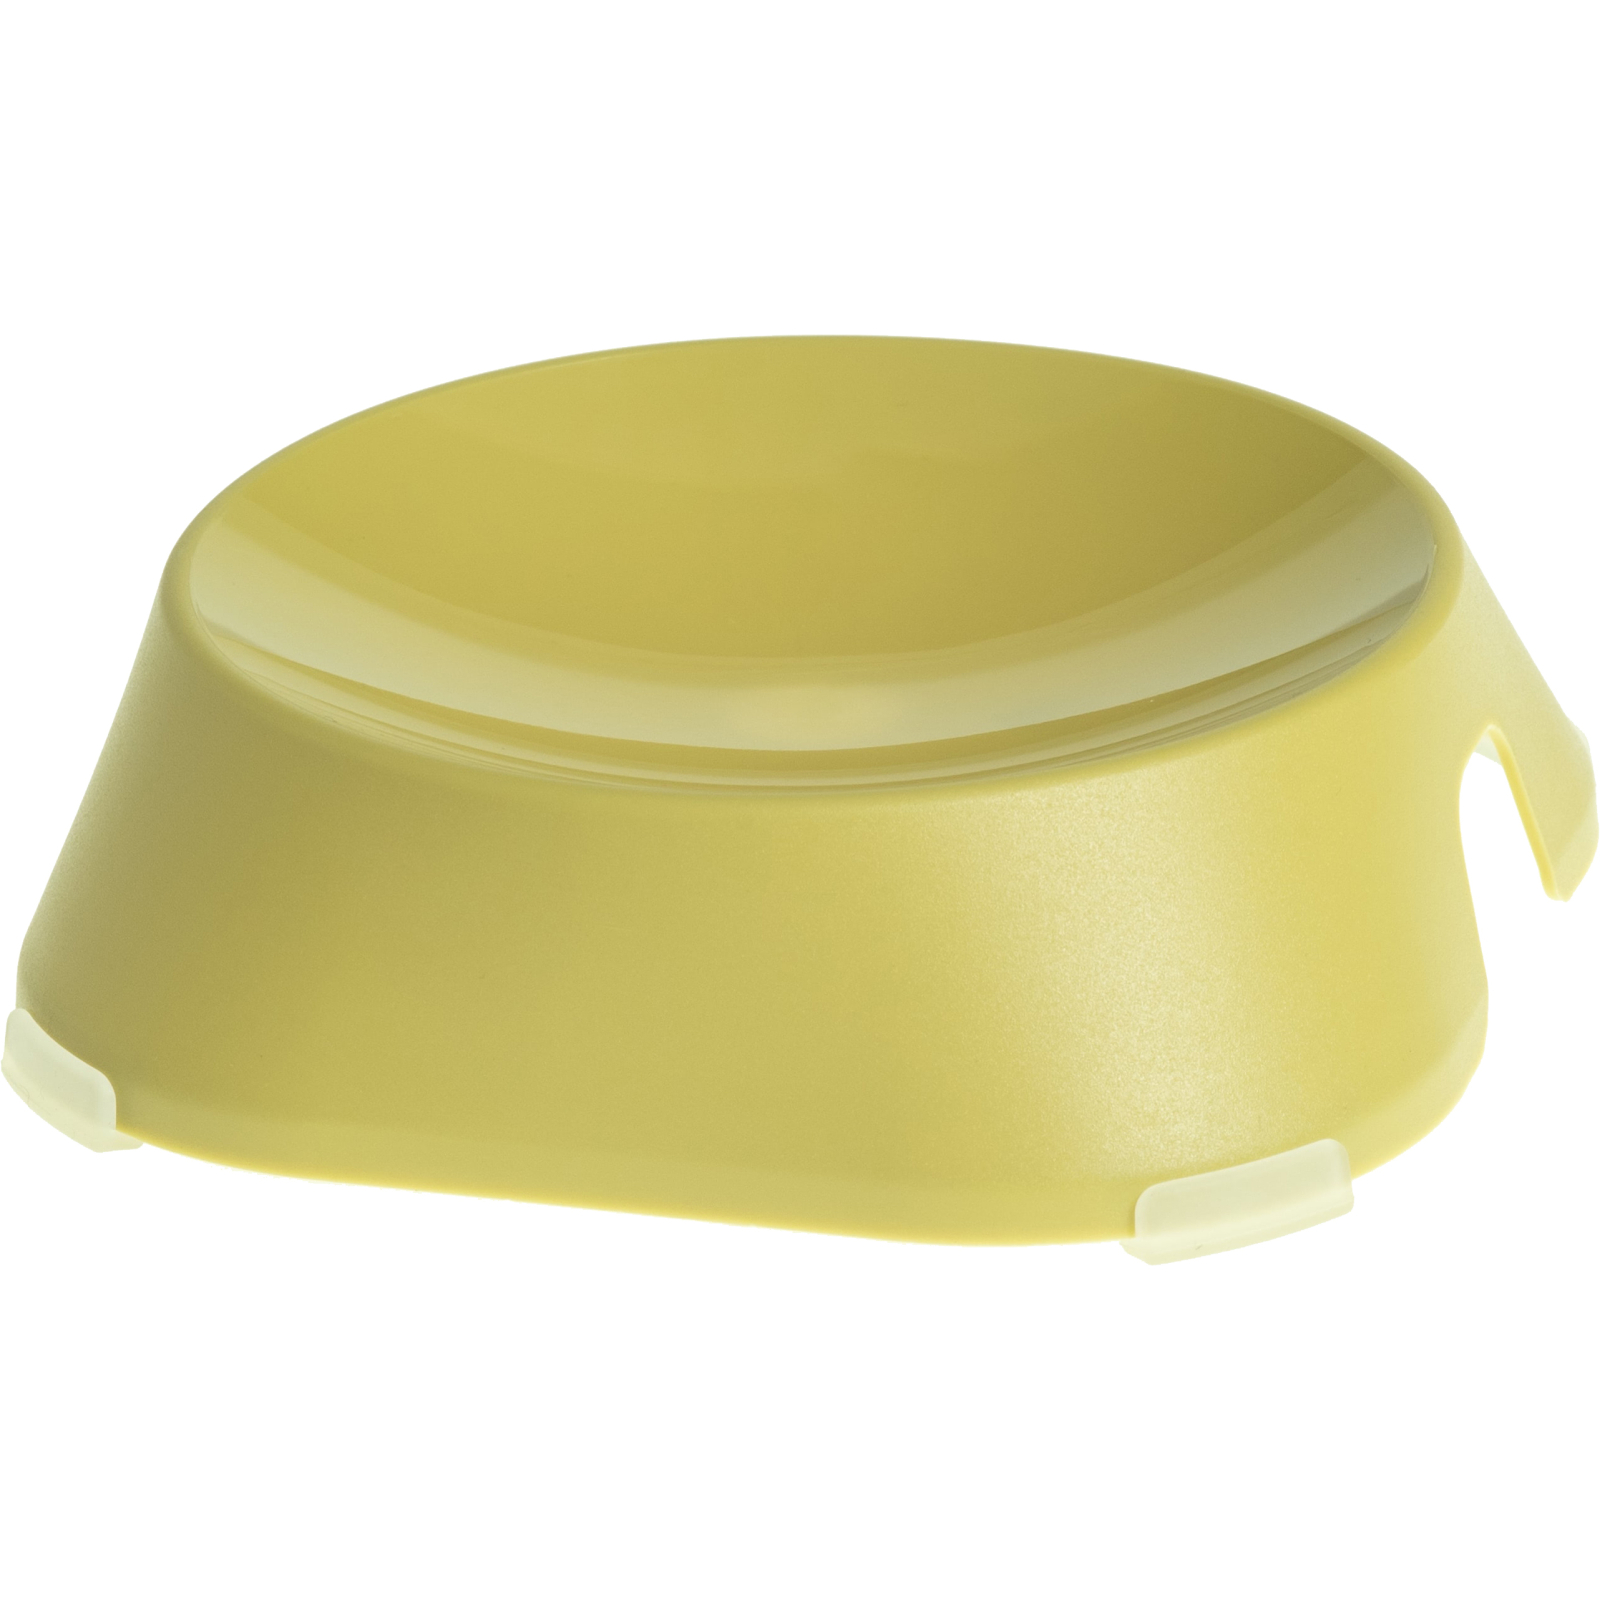 Посуда для кошек Fiboo Flat Bowl миска без антискользких накладок желтая (FIB0128)